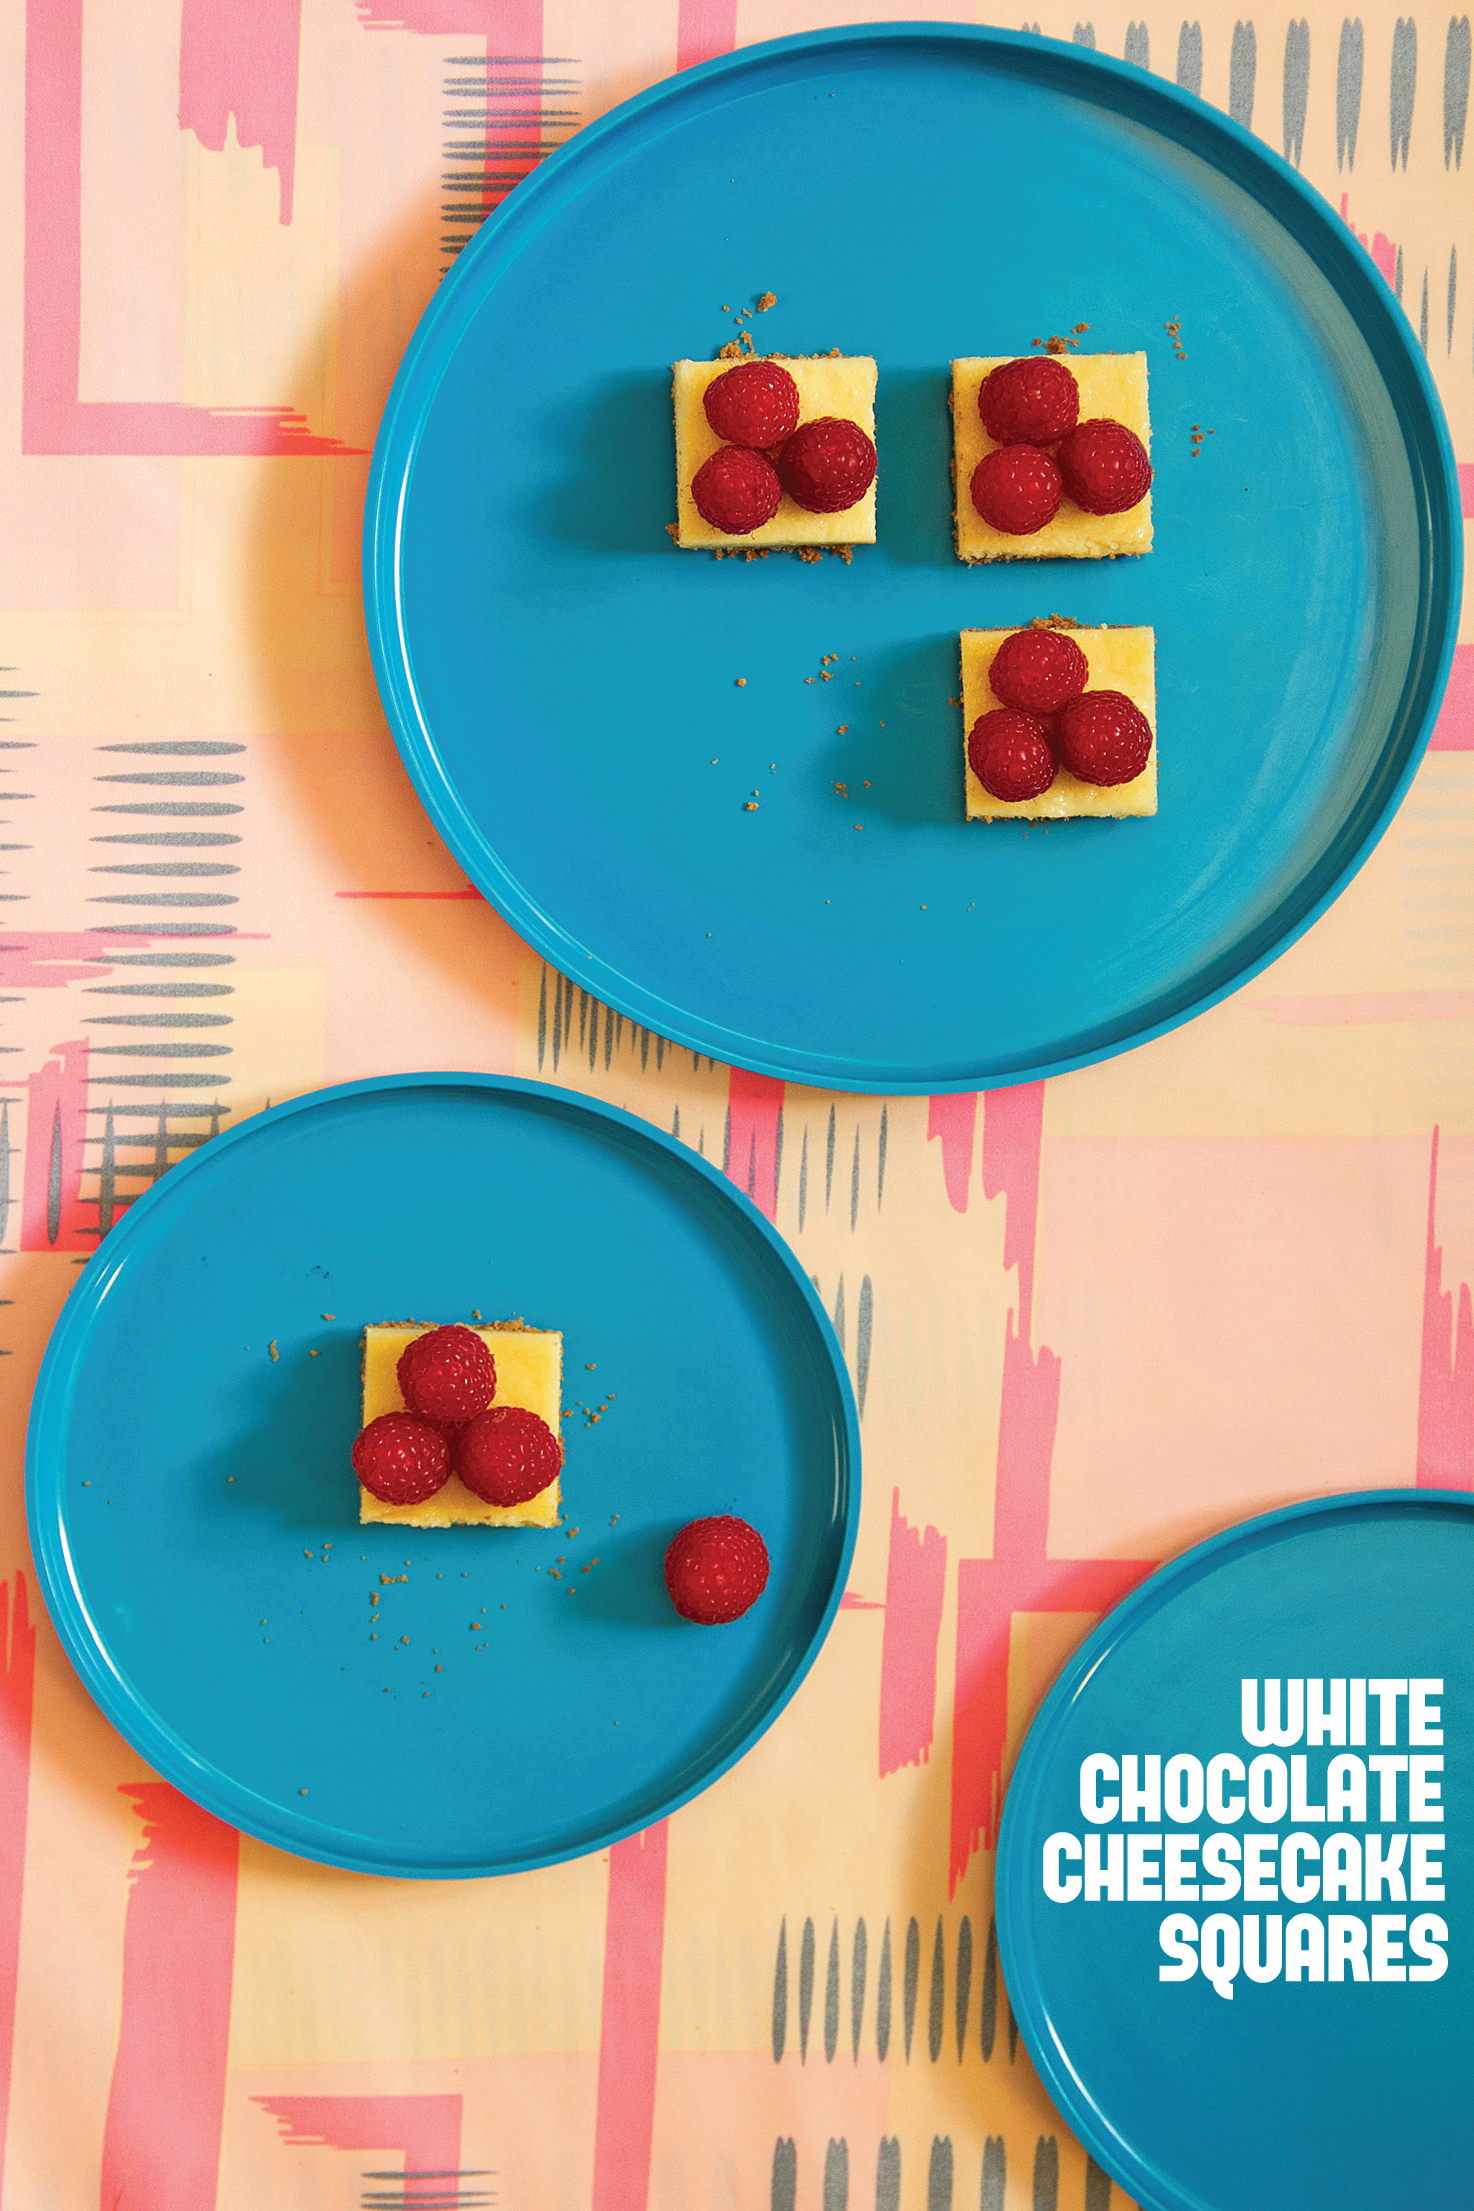 White Chocolate Cheesecake Squares with Fresh Raspberries